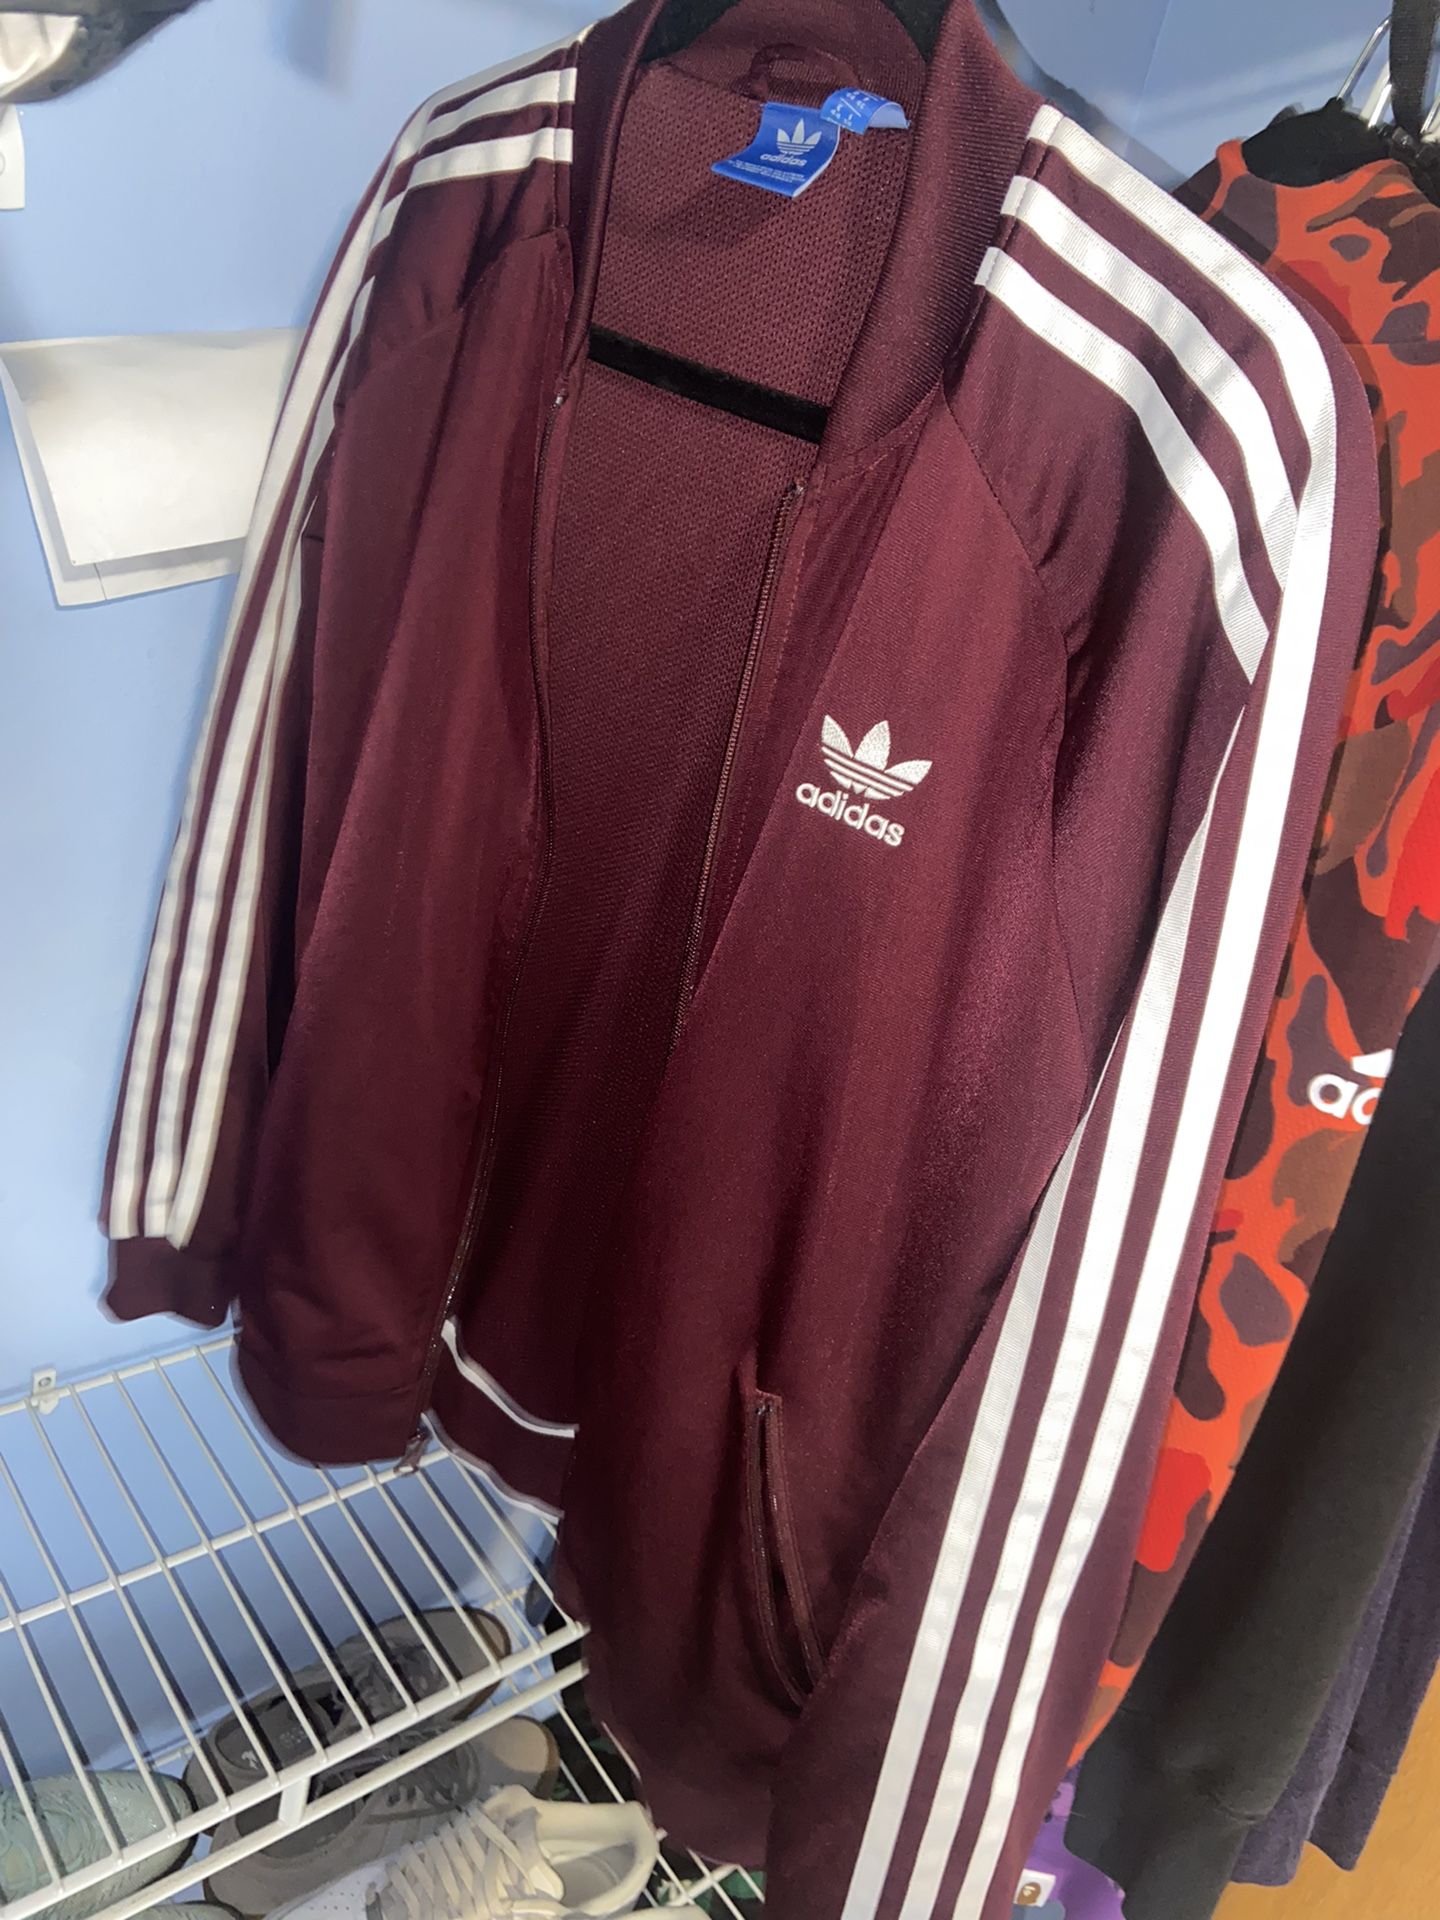 Adidas track jacket (small men’s)